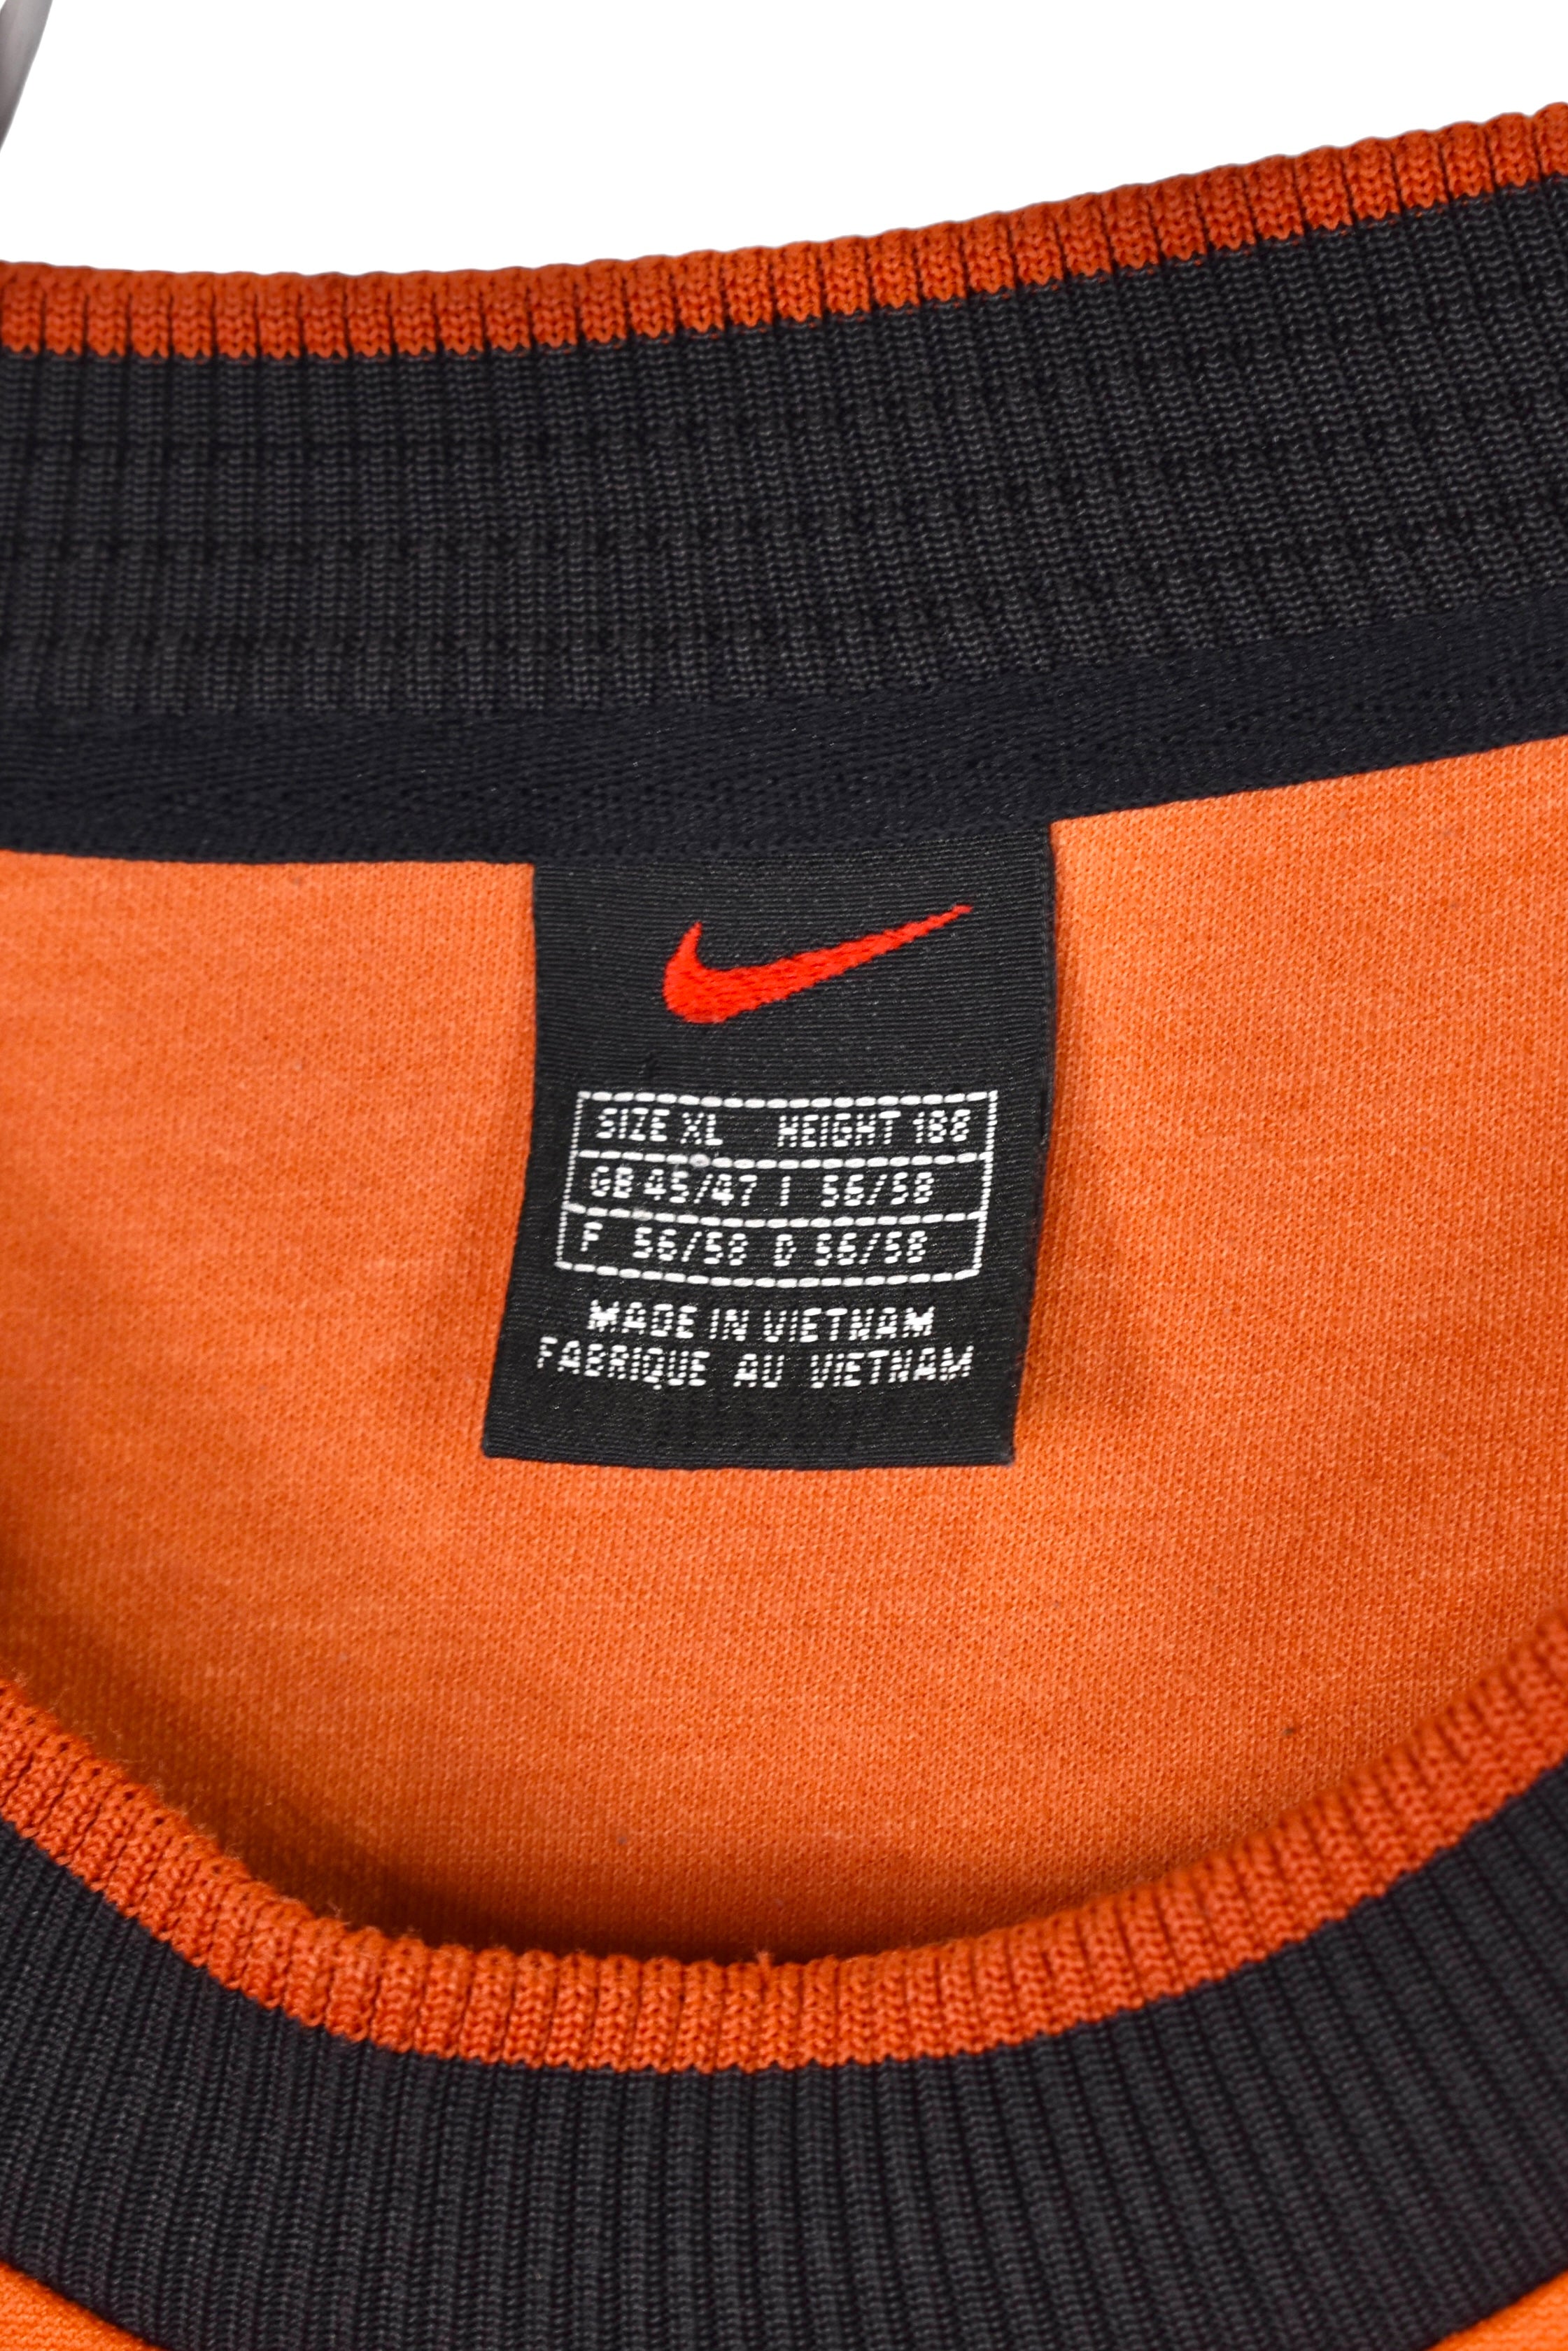 Vintage Nike sweatshirt, orange embroidered crewneck - XXL